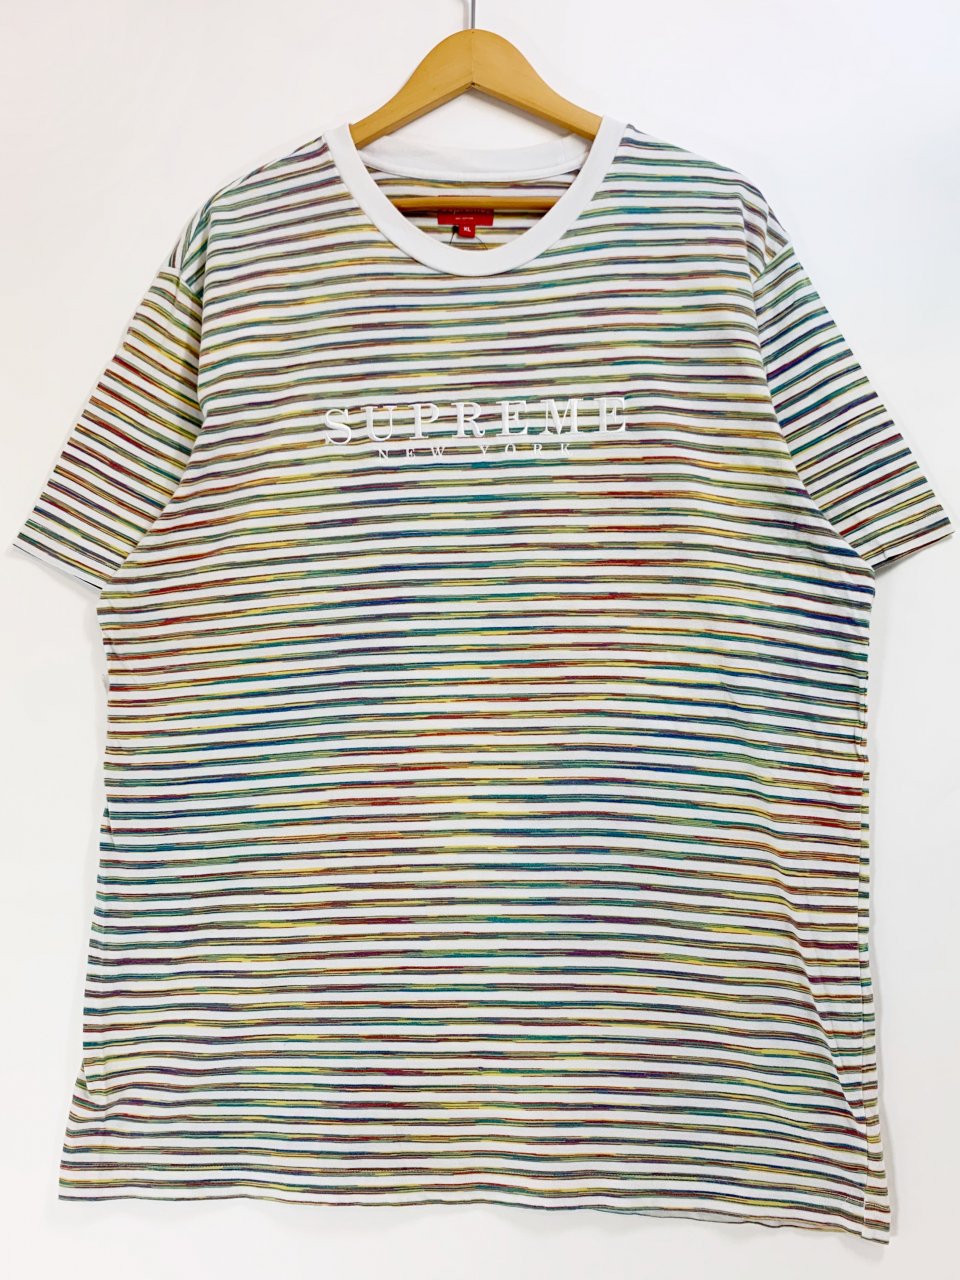 Supreme - Rocksteady Top Tシャツ XL シュプリーム